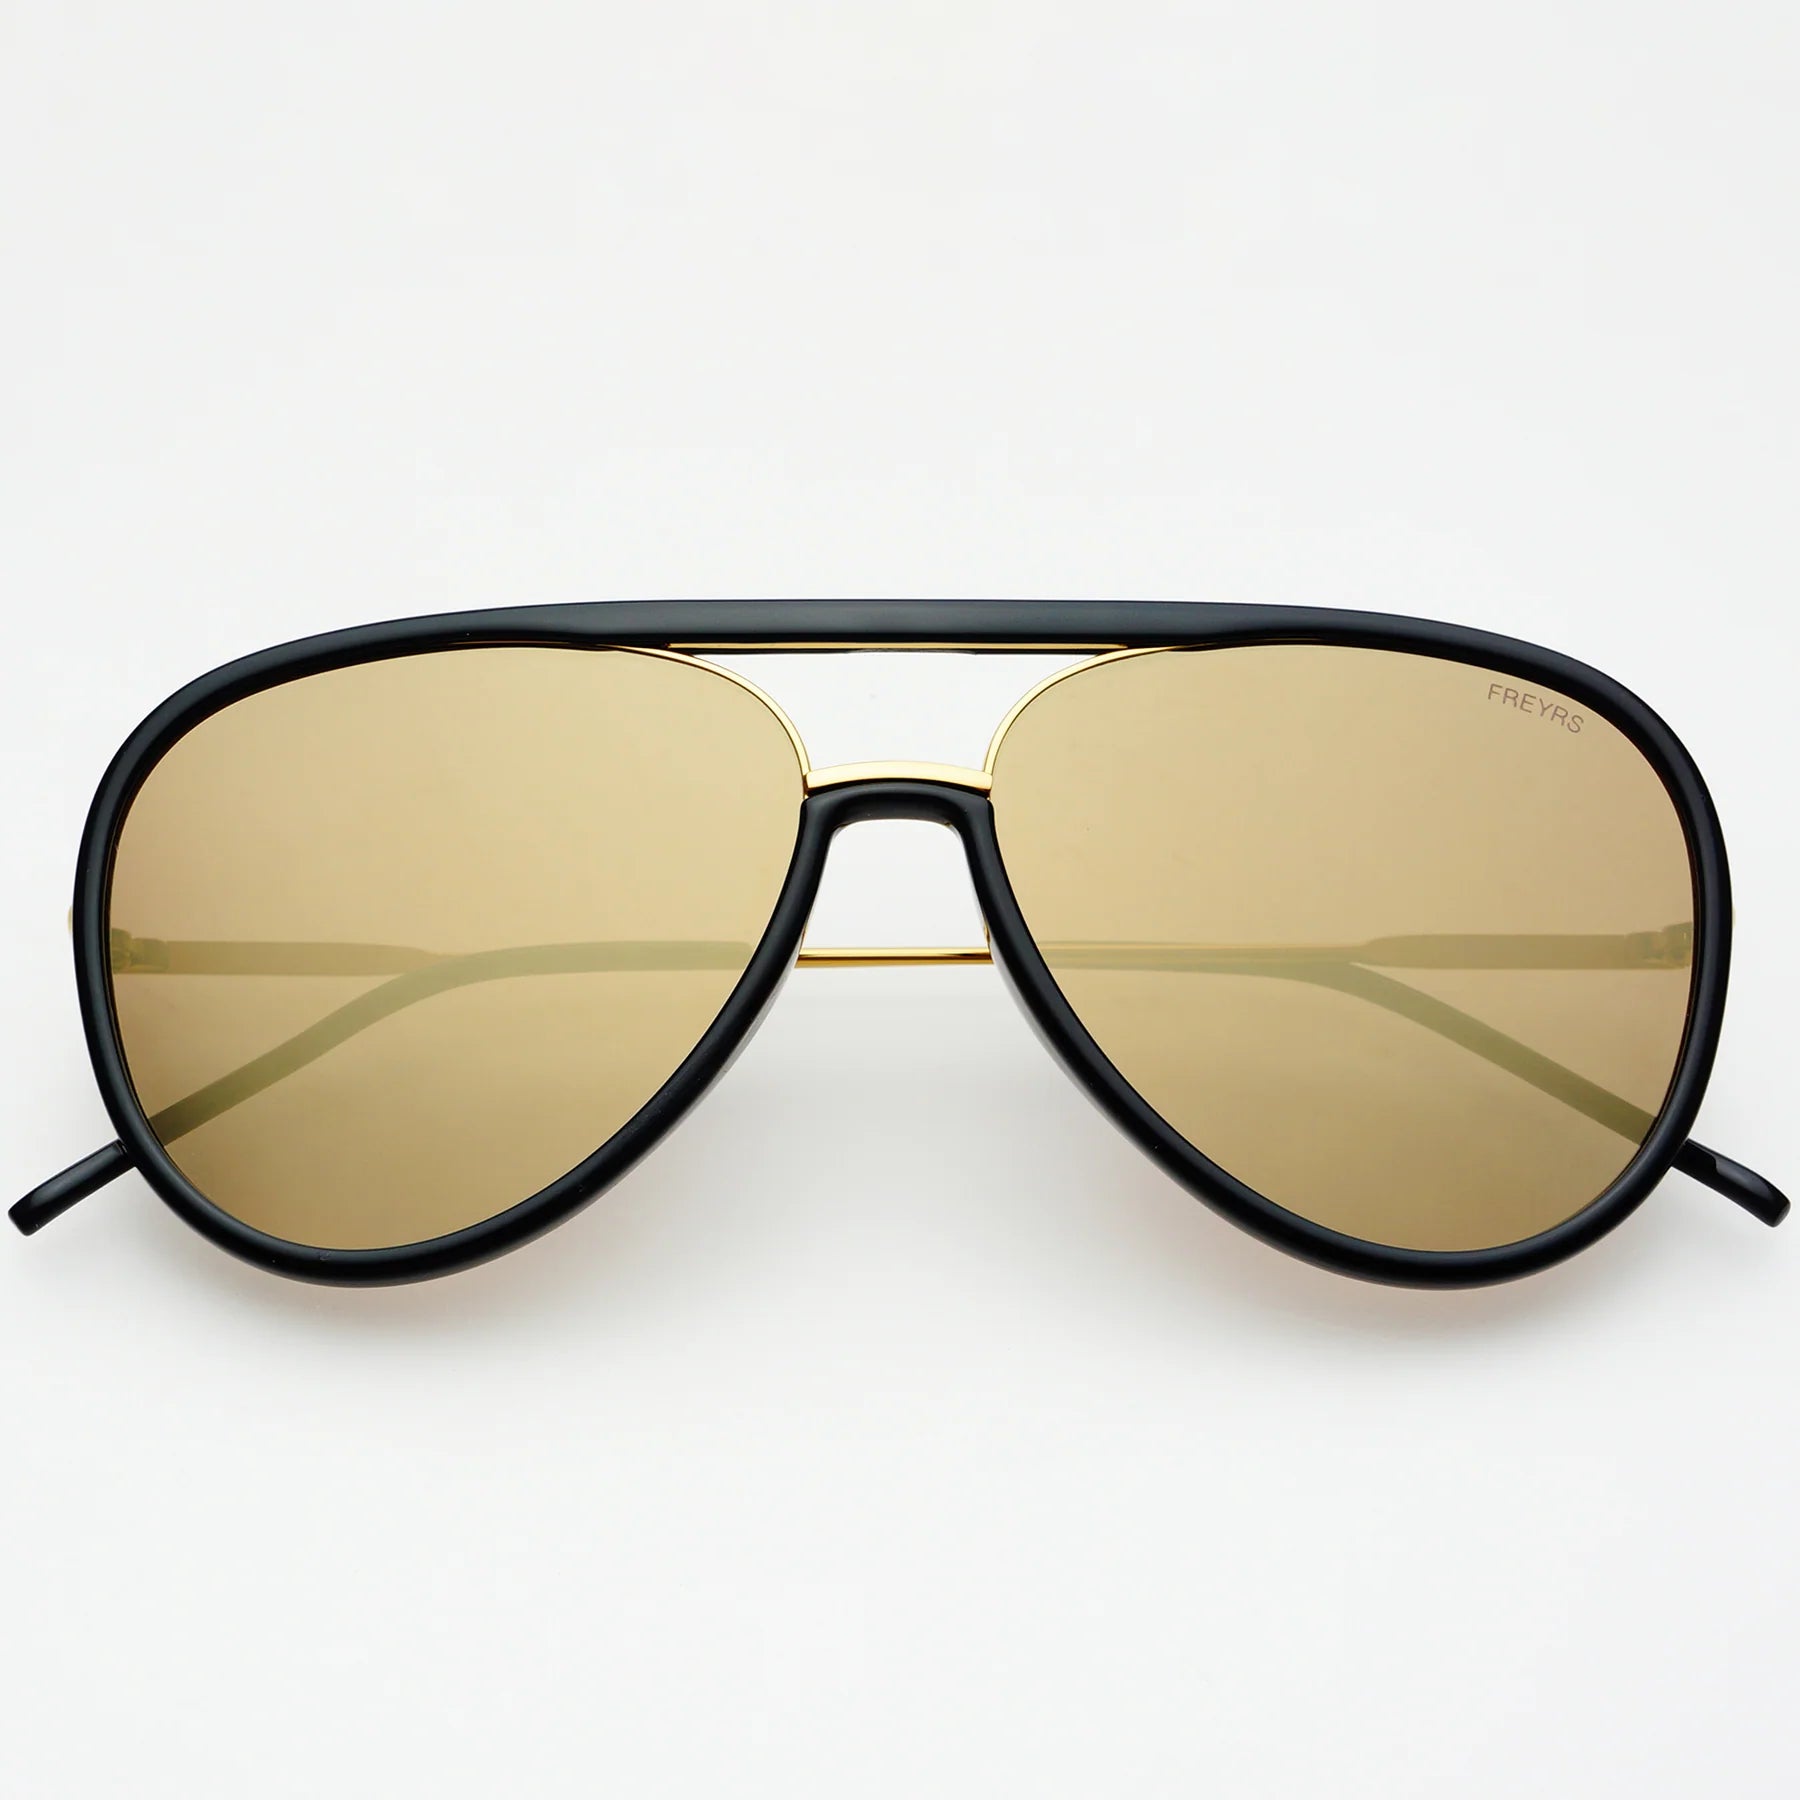 shay freyrs sunglasses